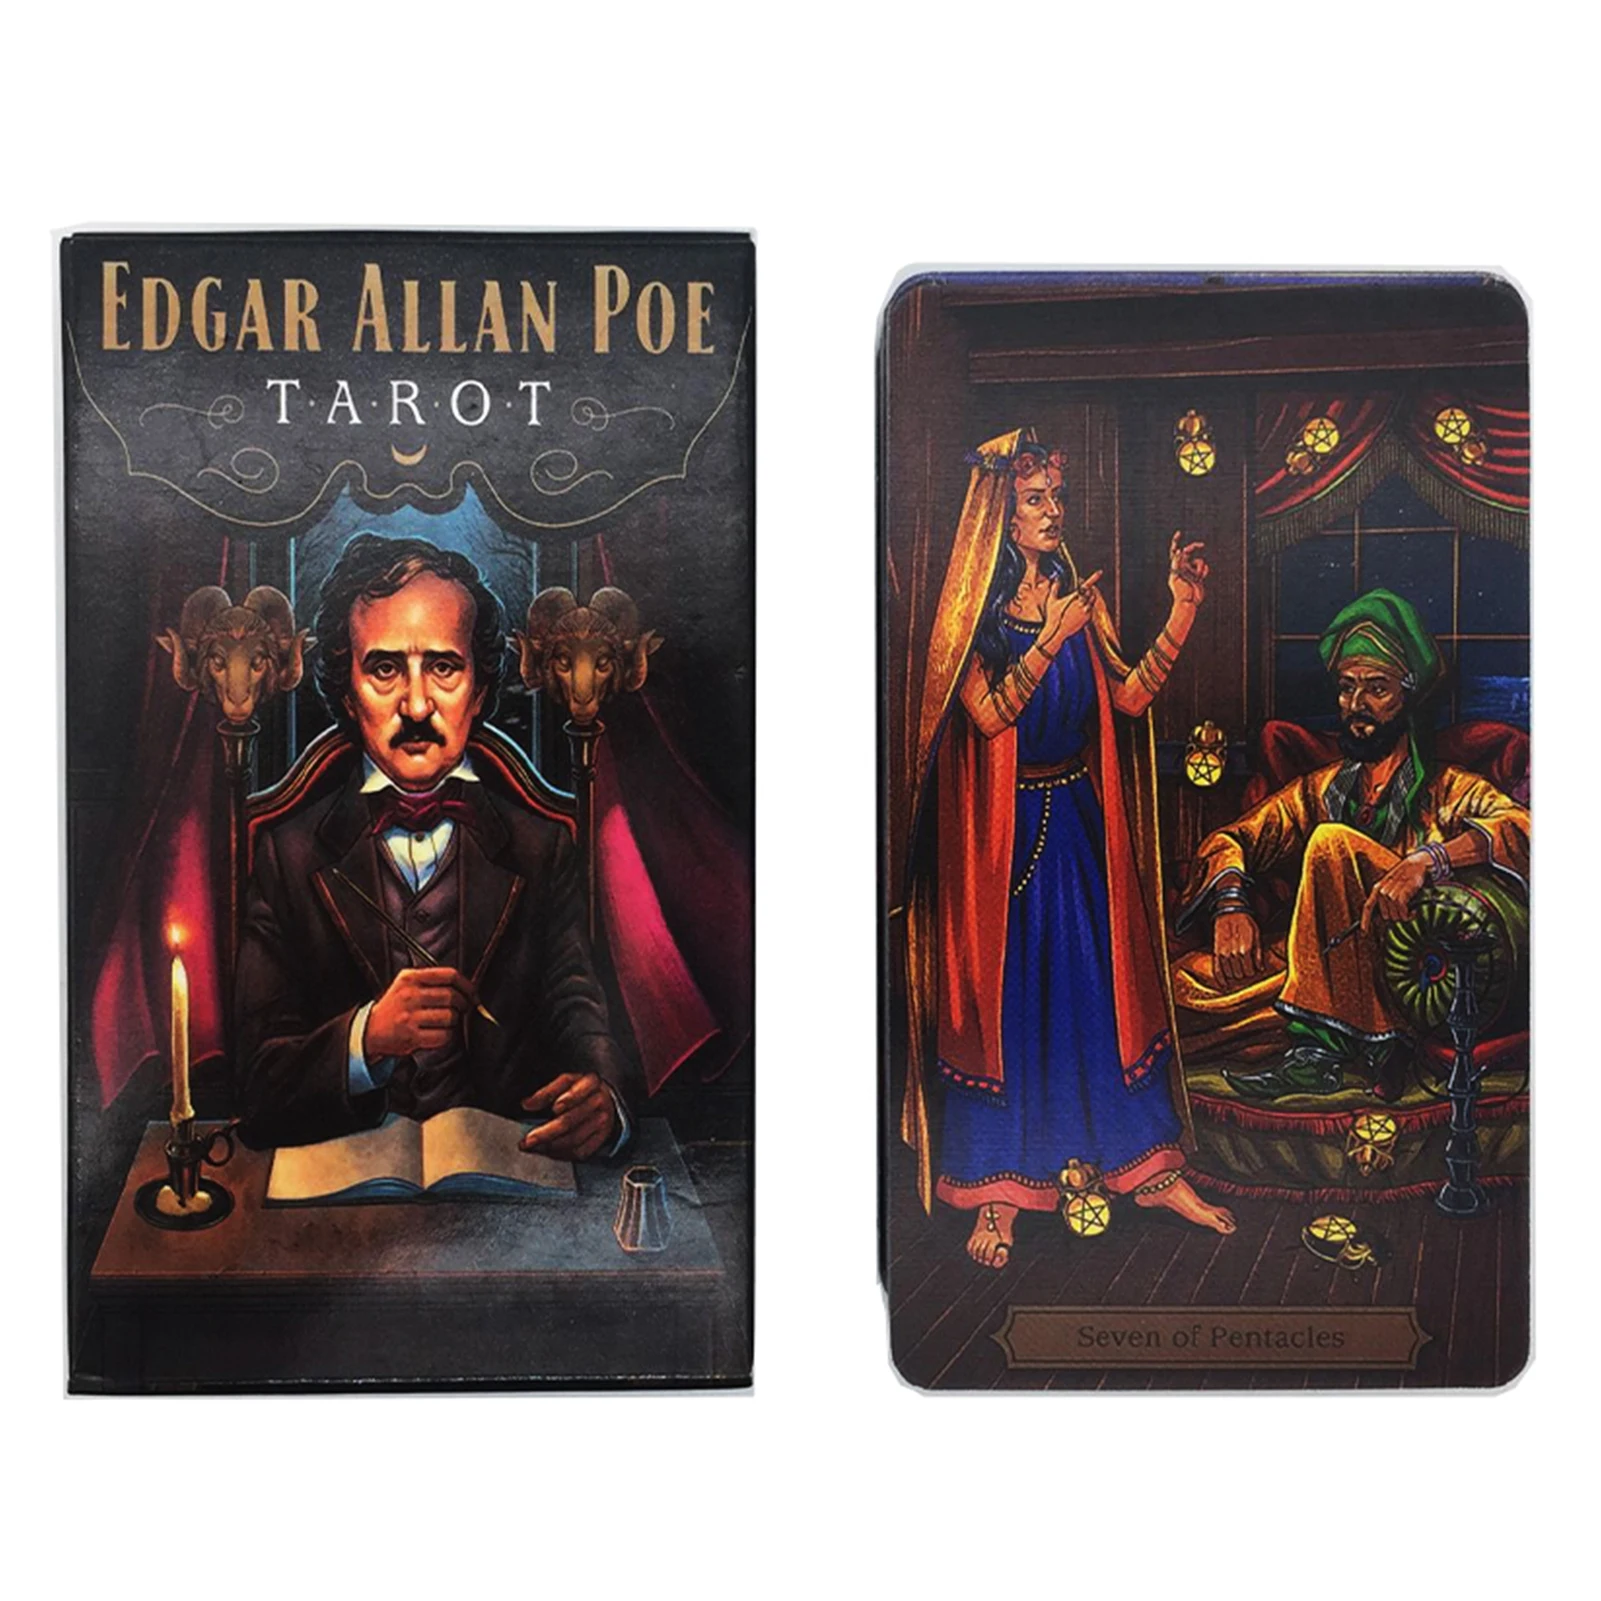 

Edgar Allan Poe Fortune Telling Divination Tarot Deck Family Party Leisure Table Edgar Allan Poe Tarot Cards Fortune Tell Game